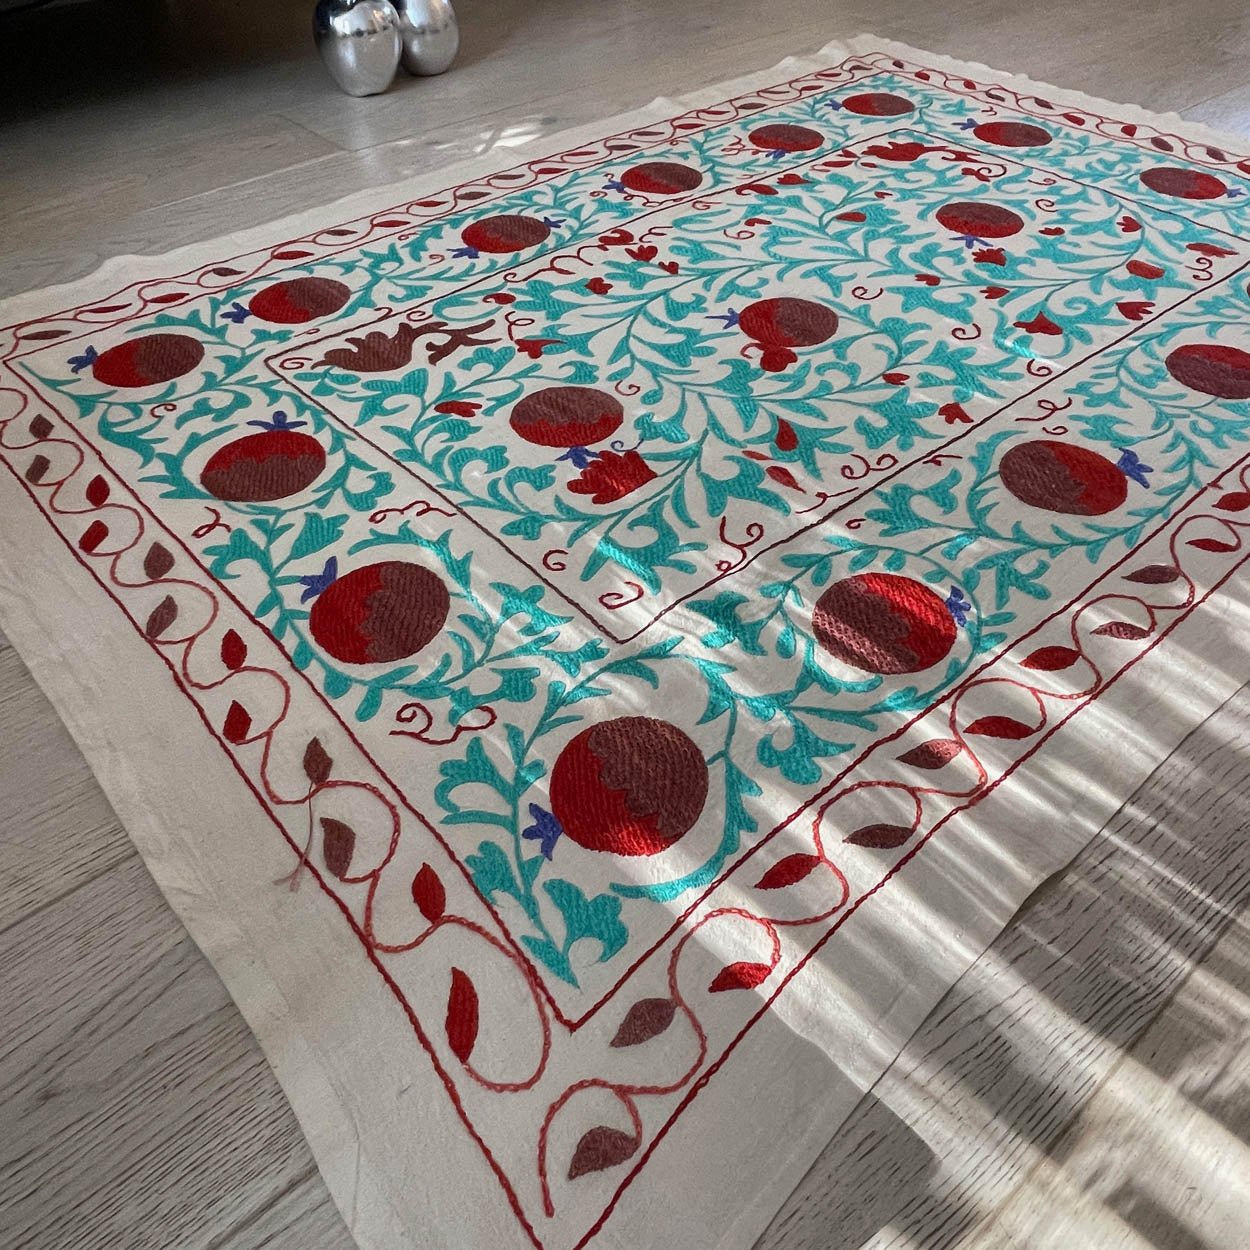 Uzbeki Suzani Hand Embroidered Textile Wall Hanging | Home Décor | Throw | 108cm x 150cm SUZ220518009 - Wildash London